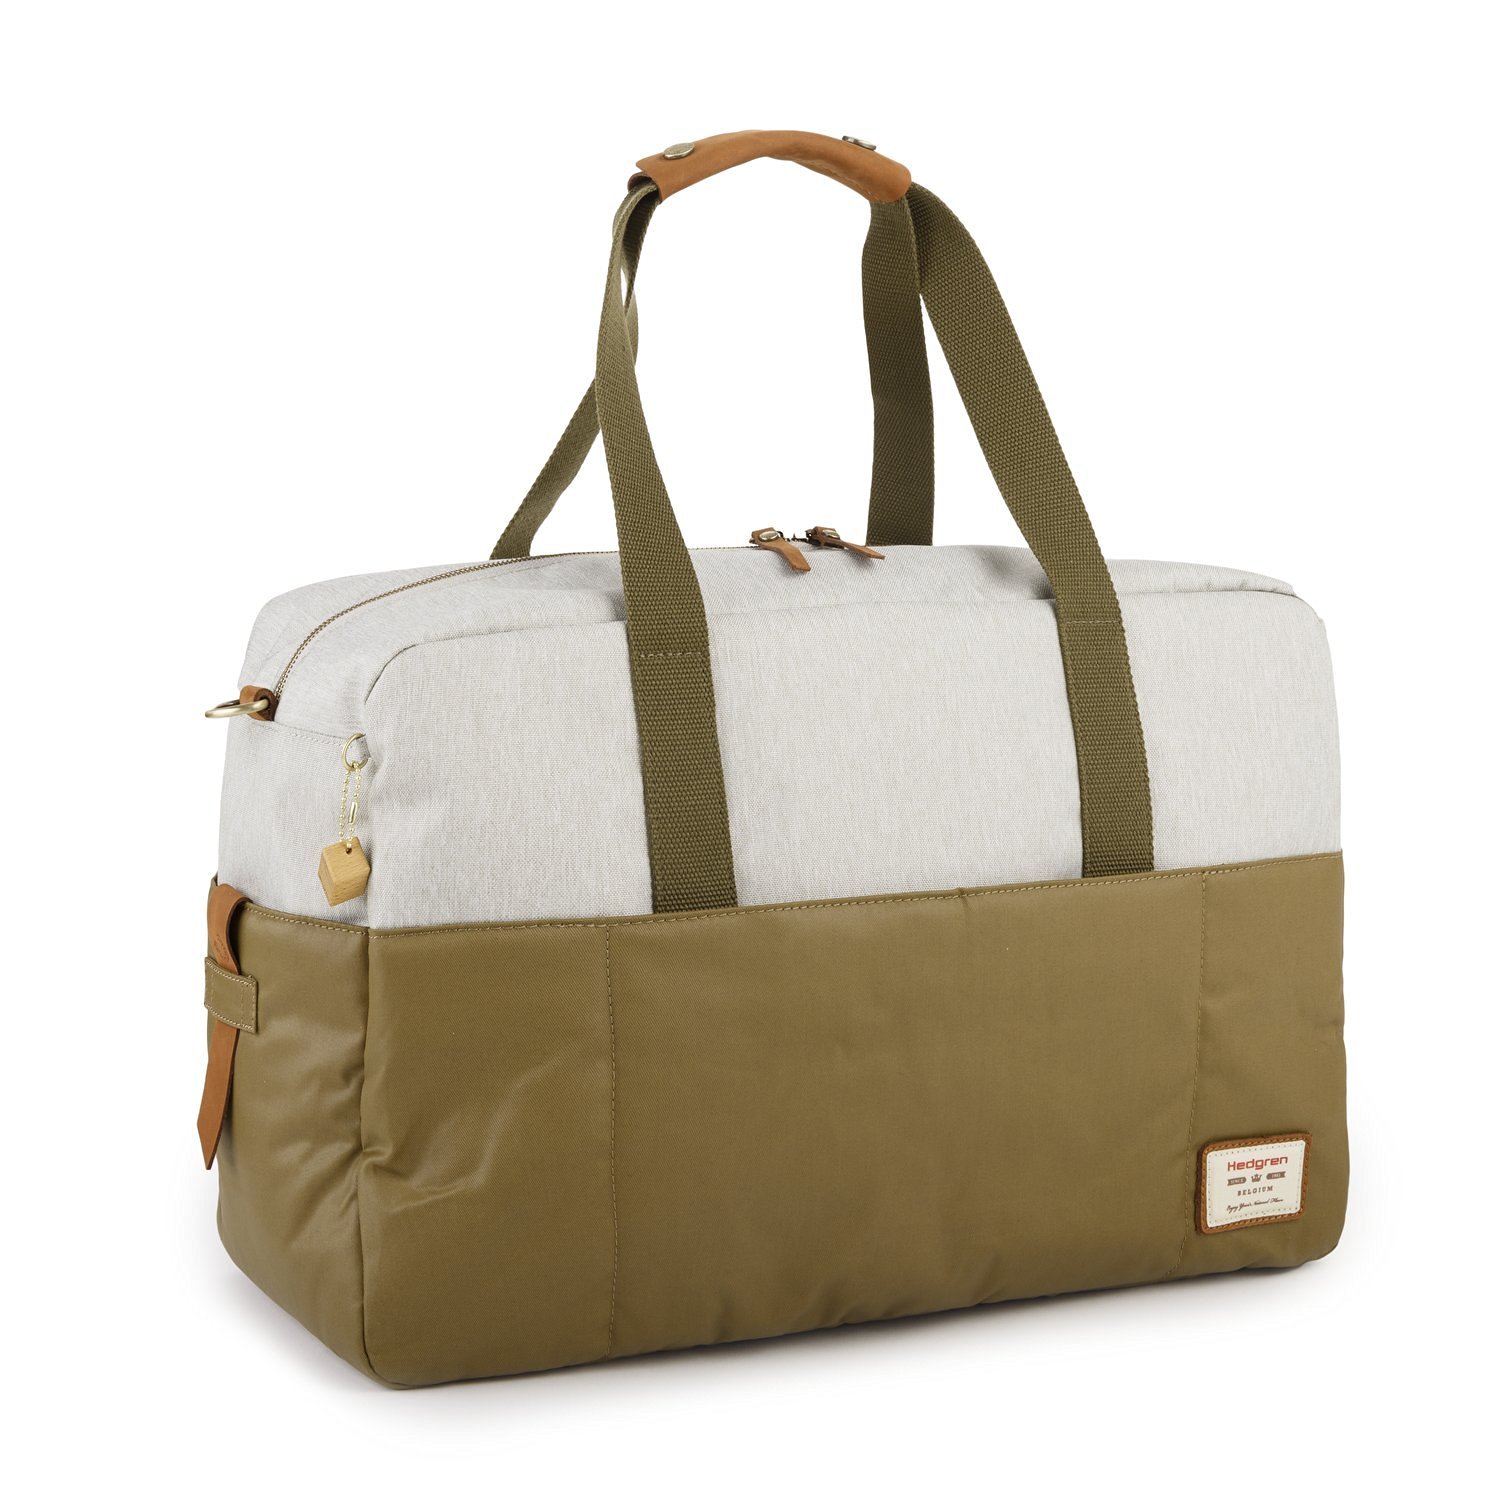 Hedgren Sitka Large Duffel Bag Apricot Brandy/Off White | eBay